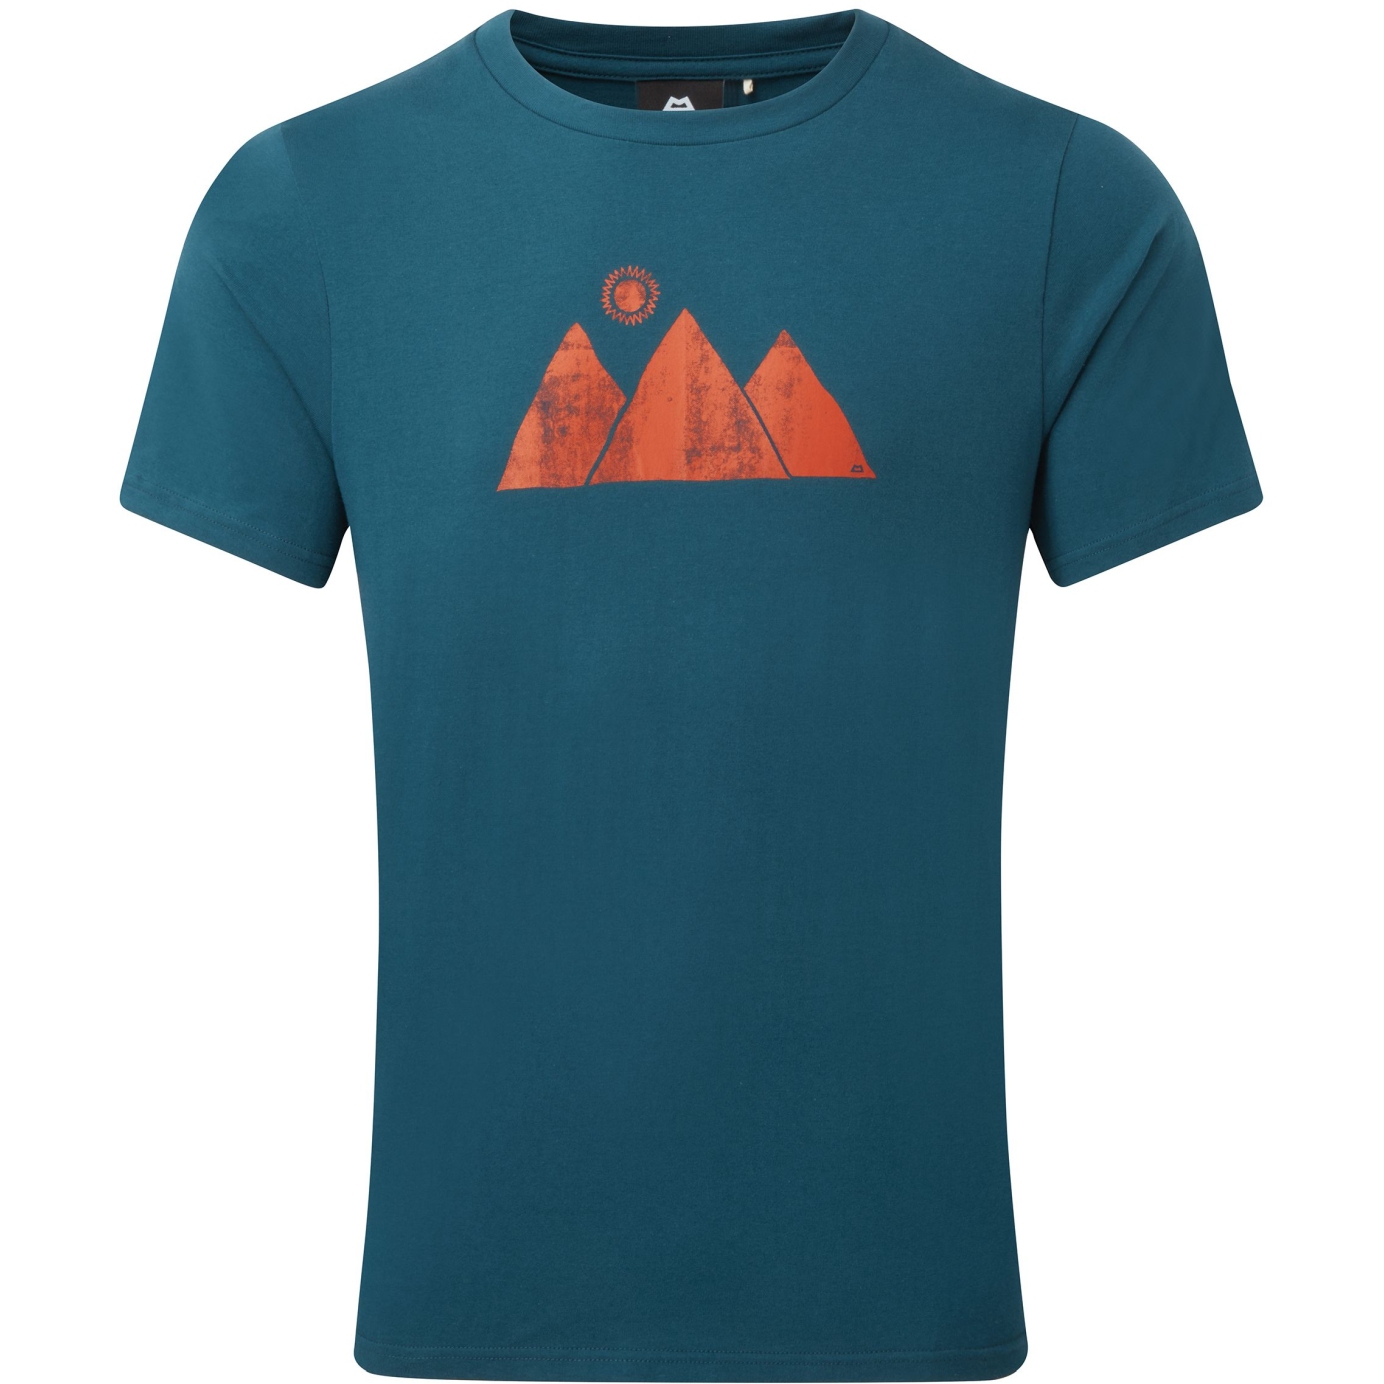 Bild von Mountain Equipment Mountain Sun T-Shirt Herren ME-004771 - majolica blue